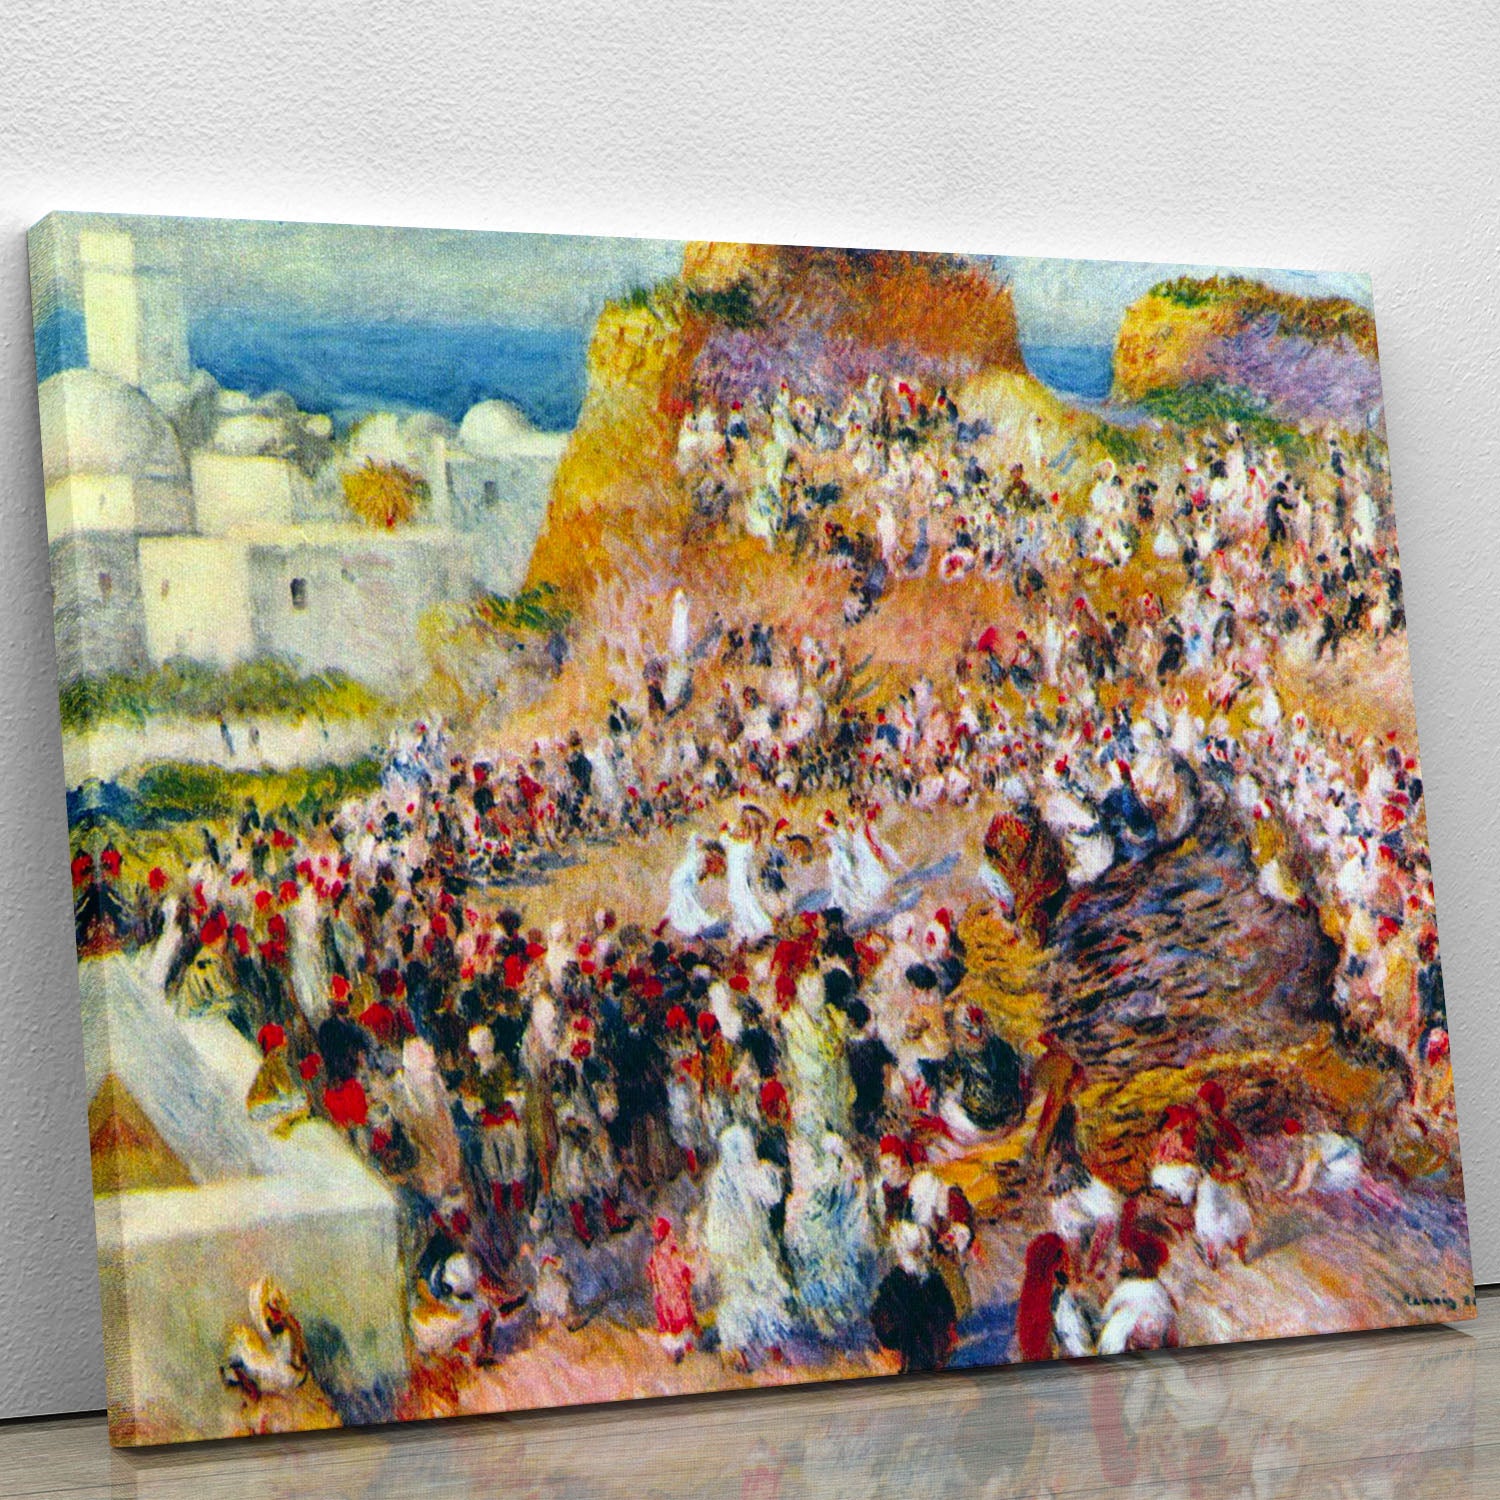 The mosque Arabian Fest by Renoir Canvas Print or Poster - Canvas Art Rocks - 1